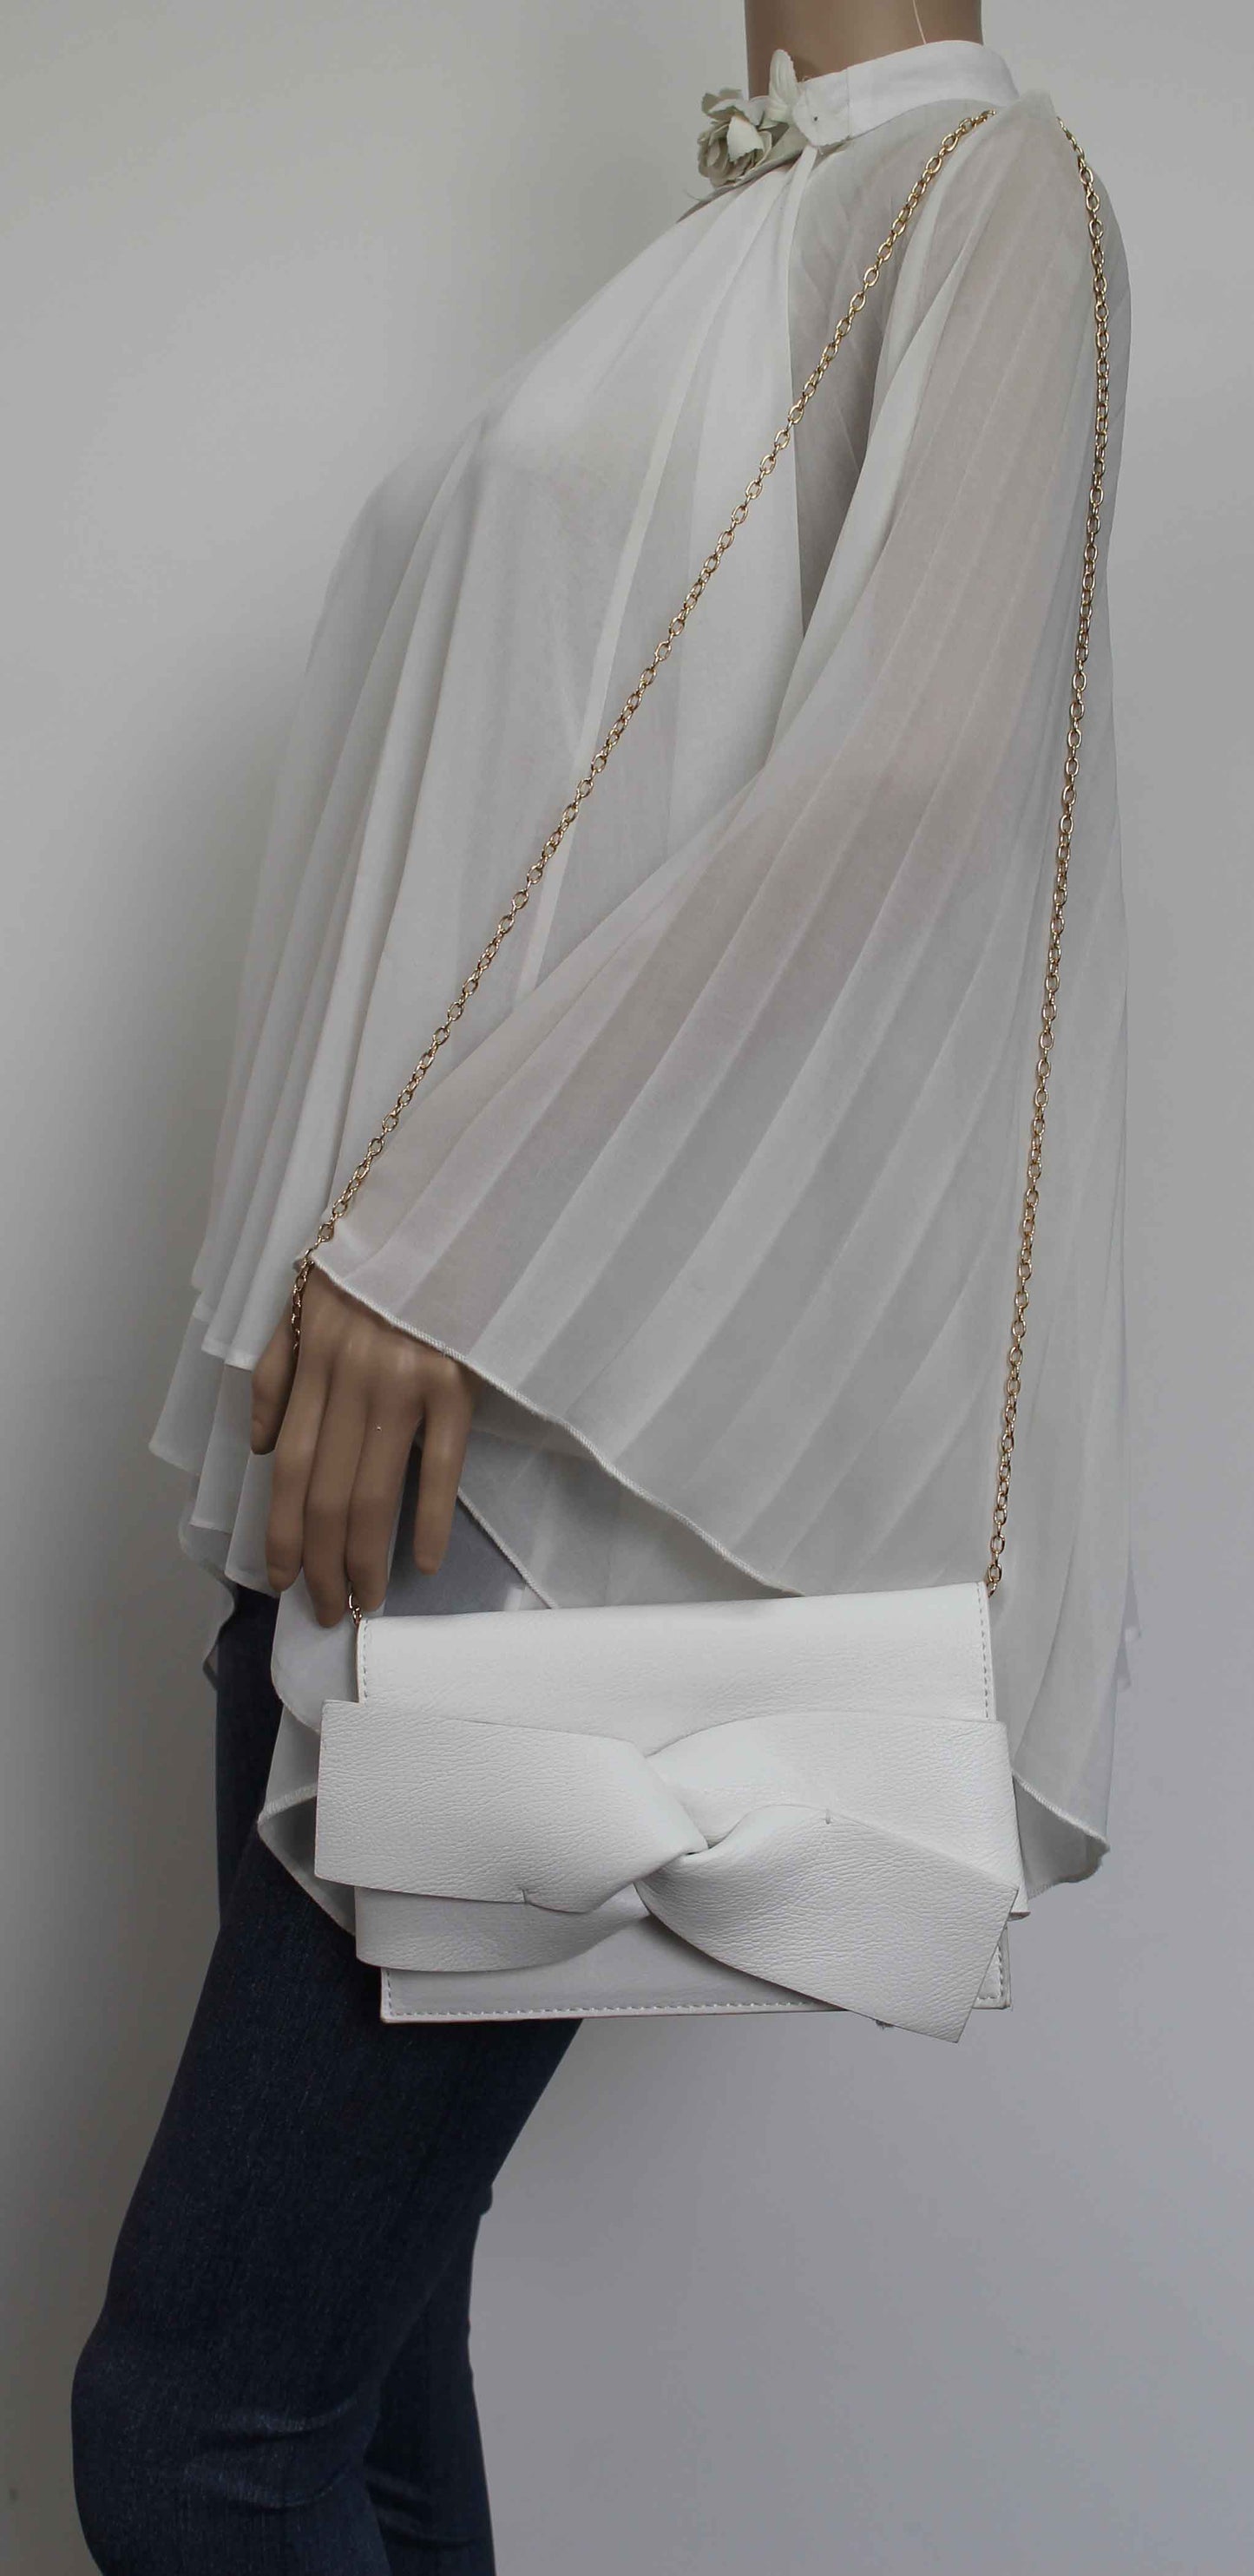 SWANKYSWANS Kira Bow Detail Clutch Bag White Cute Cheap Clutch Bag For Weddings School and Work